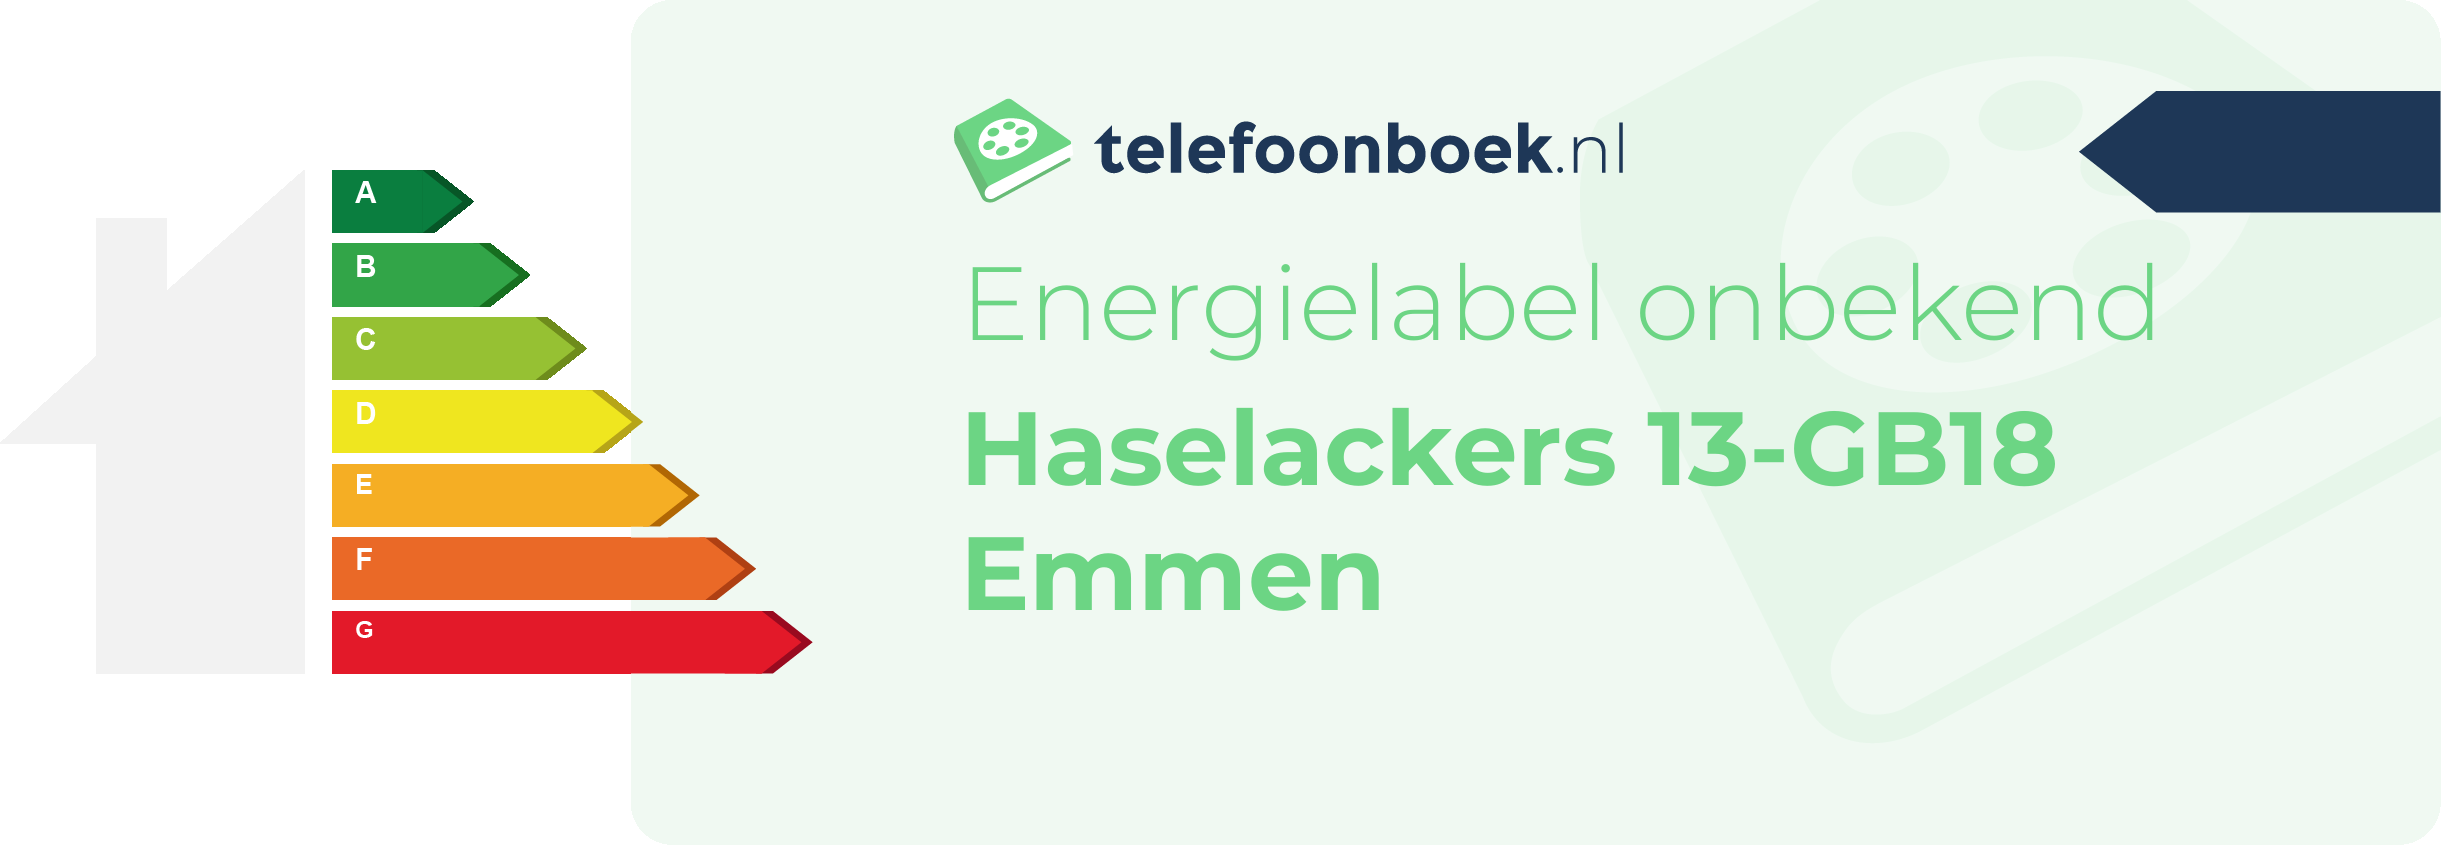 Energielabel Haselackers 13-GB18 Emmen